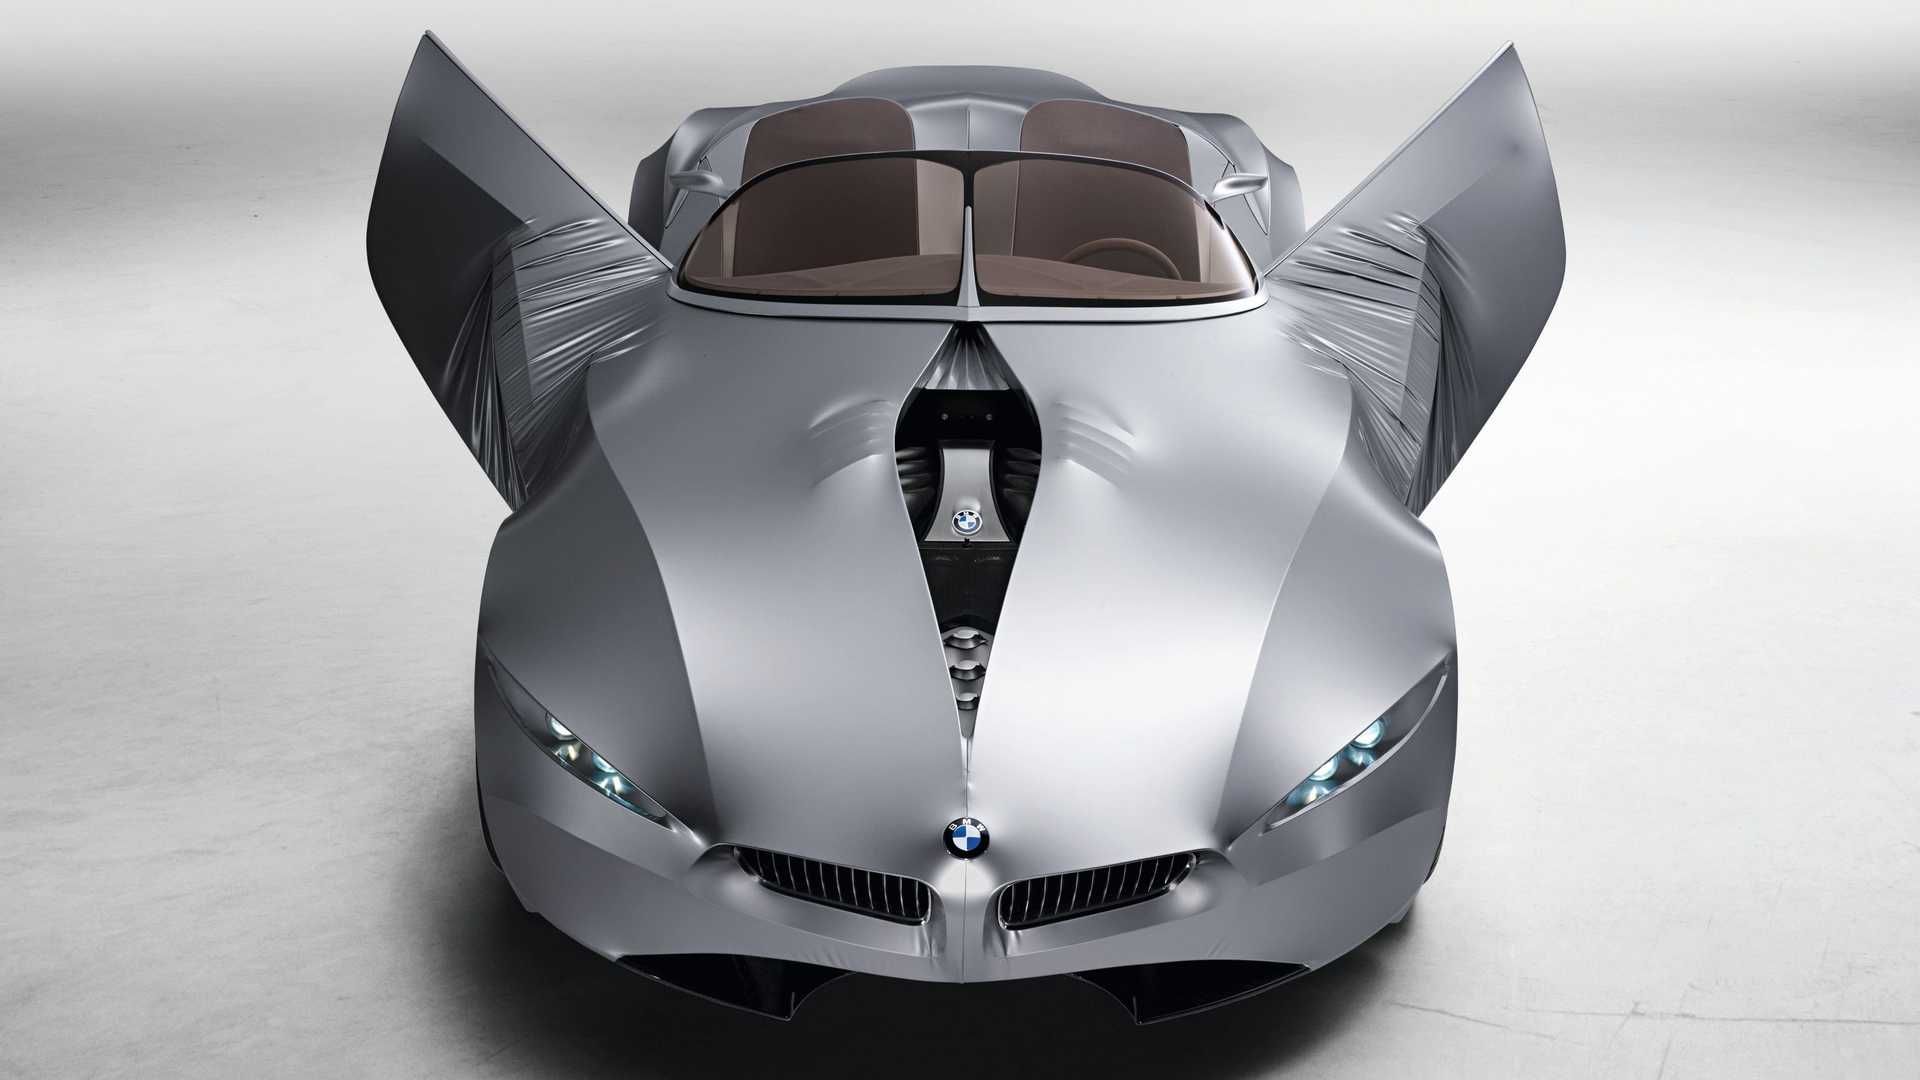 مرجع متخصصين ايران نماي كاپوت خودروي مفهومي روباز بي ام و گينا / BMW GINA concept convertible